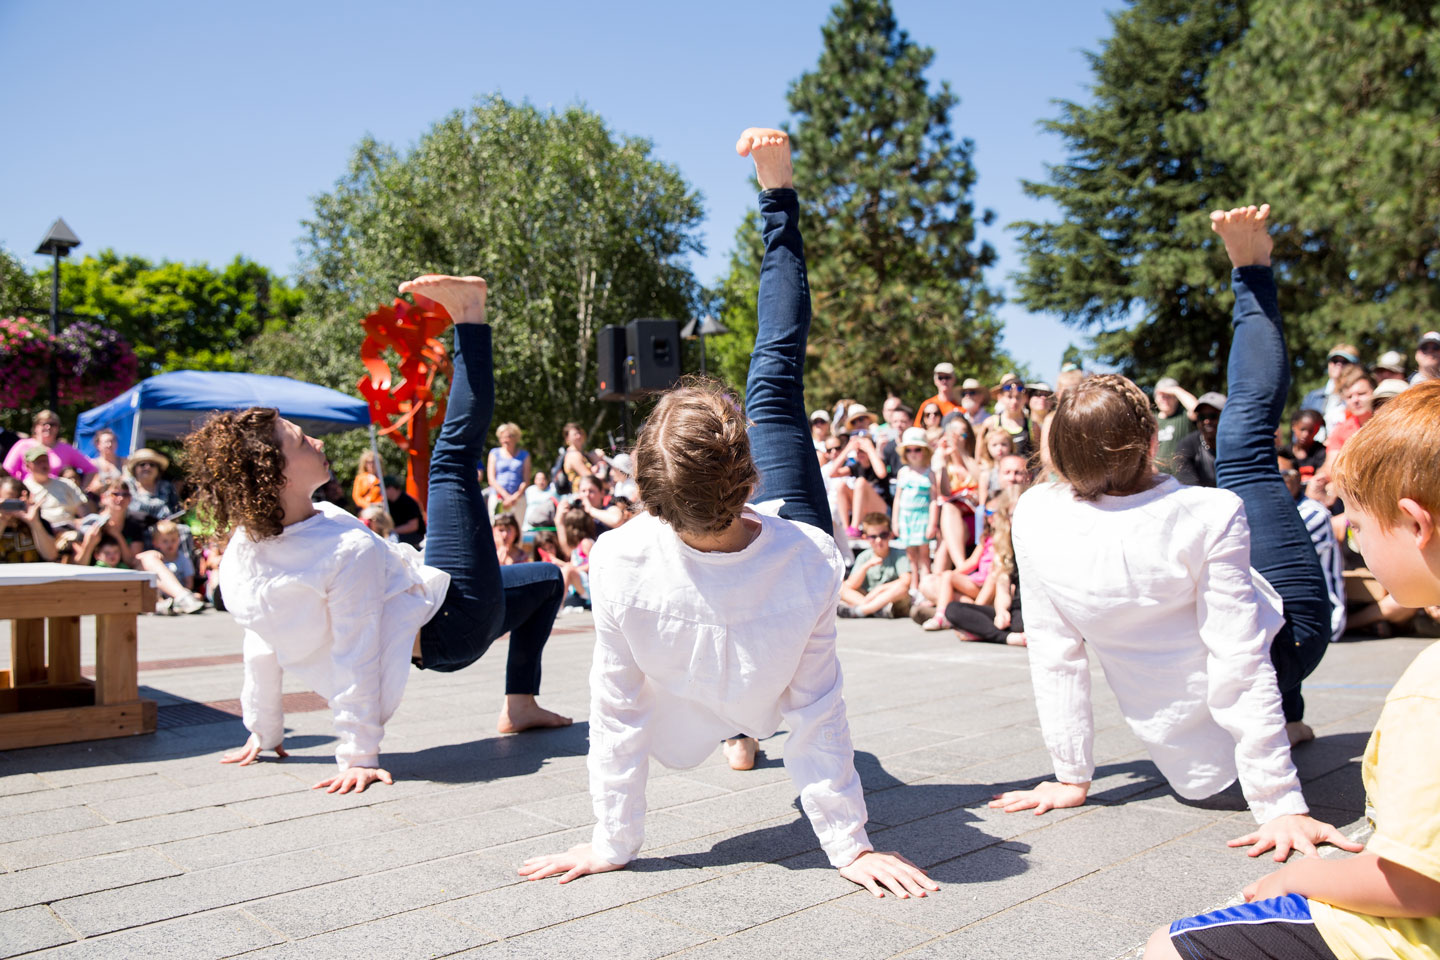 push/FOLD dancers performing 'Crow' at Ten Tiny Dances in Beaverton, Oregon | Photographer: David Nquyen